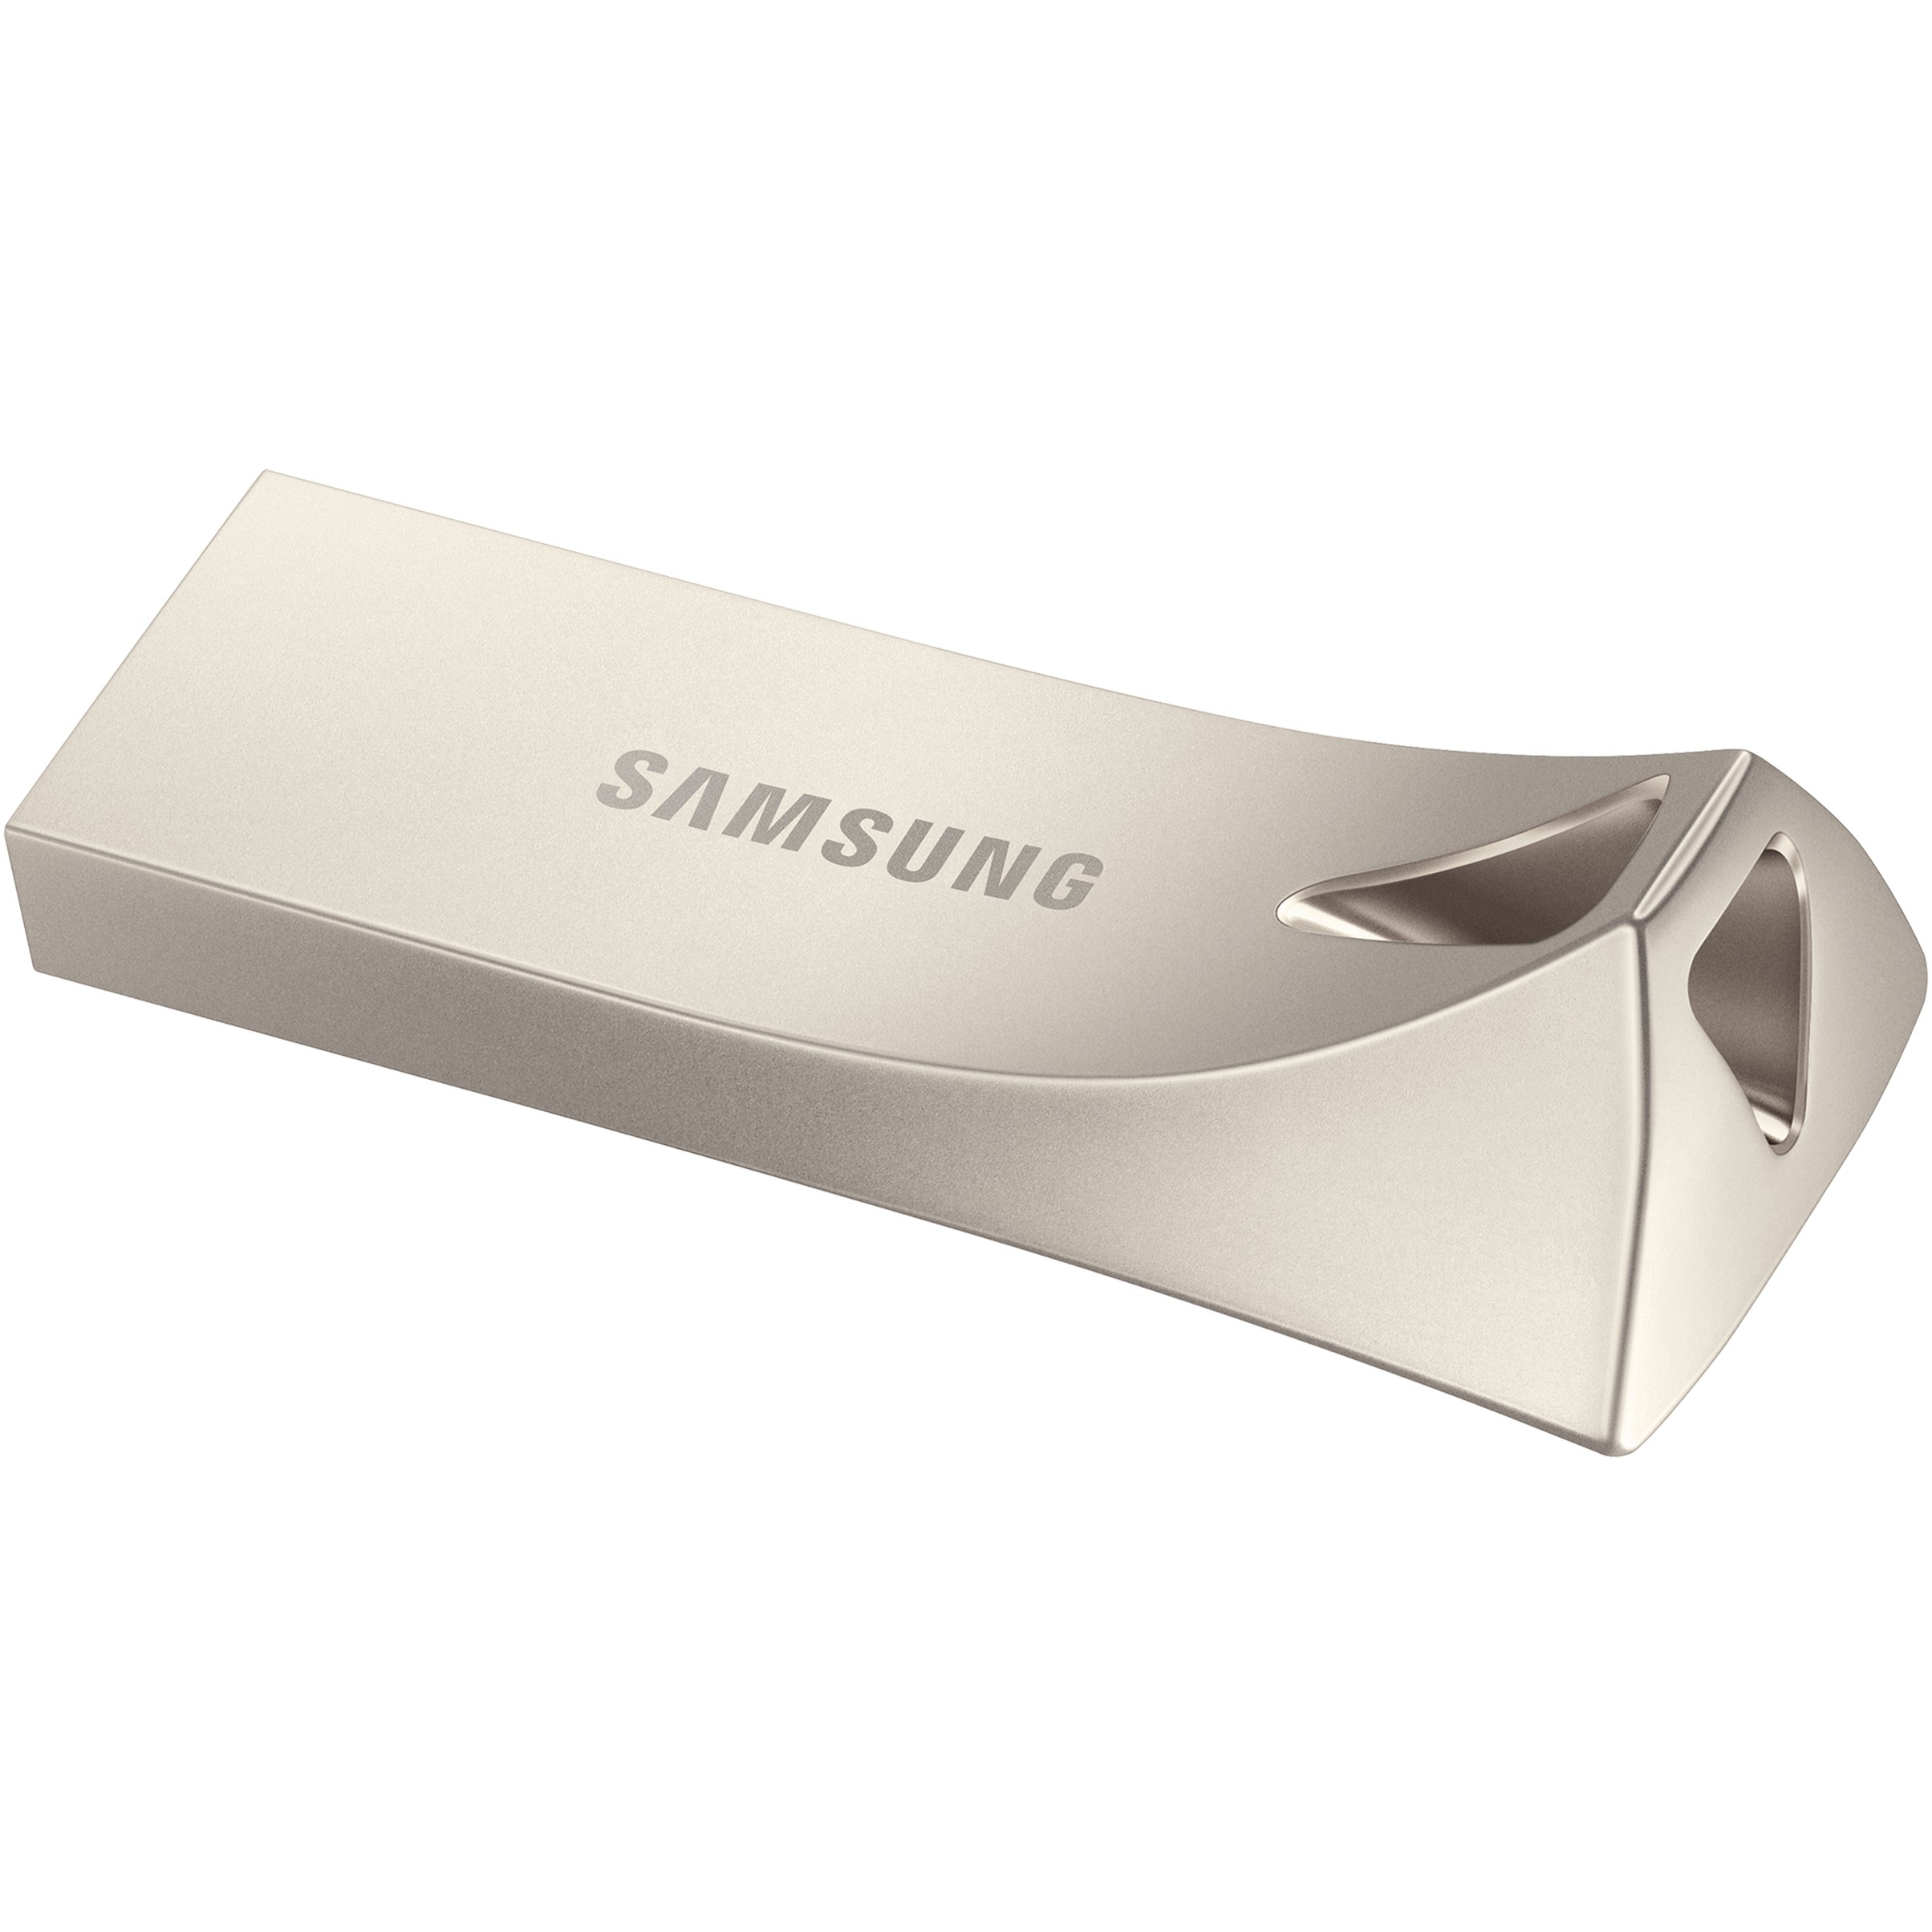 SAMSUNG MUF-128BE3/APC, USB-Stick, Samsung MUF-128BE USB  (BILD6)